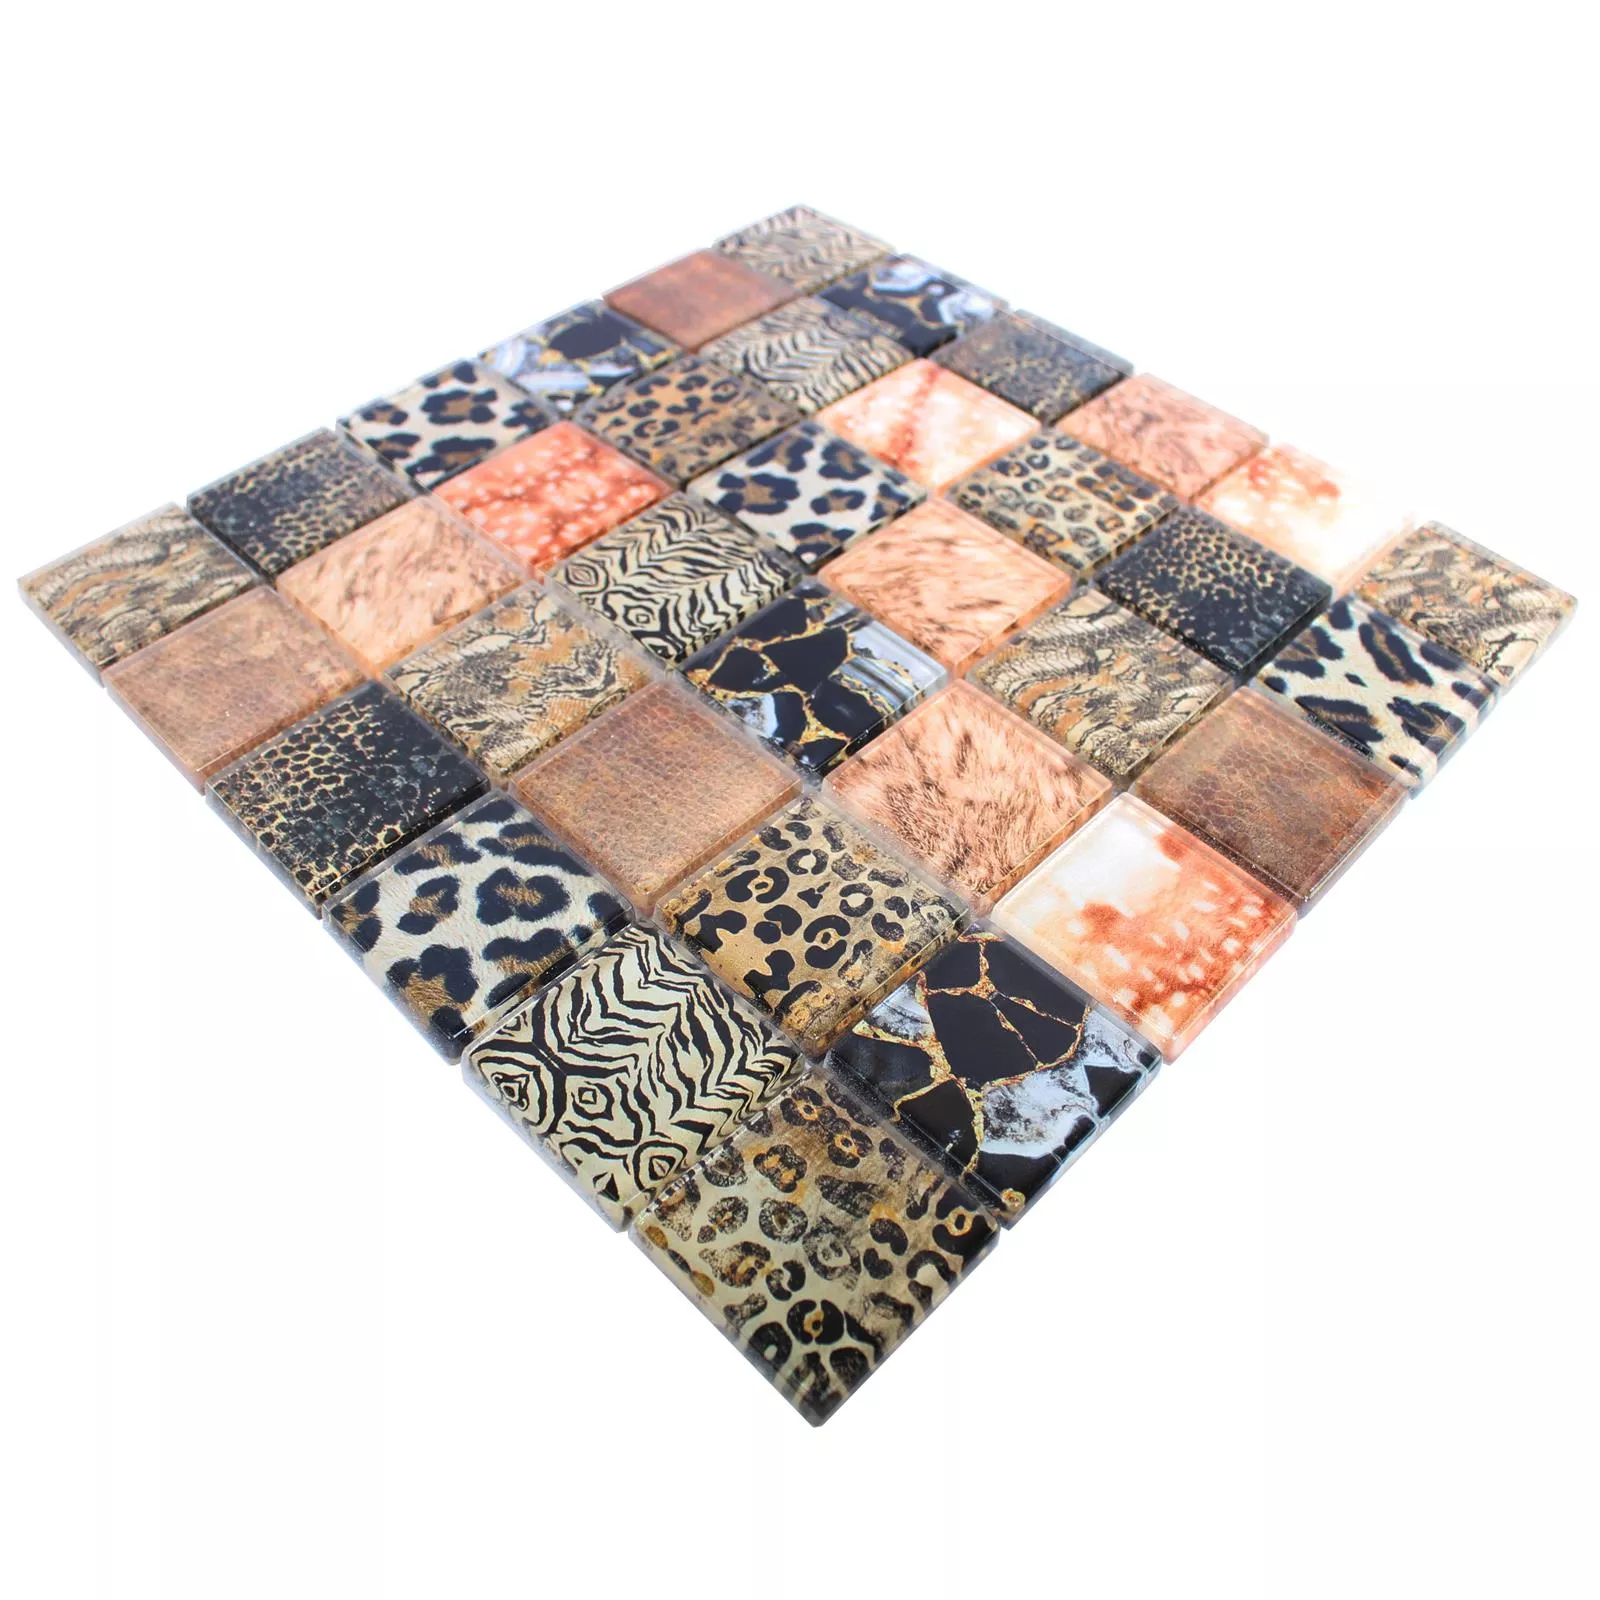 Vzorek Skleněná Mozaika Dlaždice Safari Černá Béžová